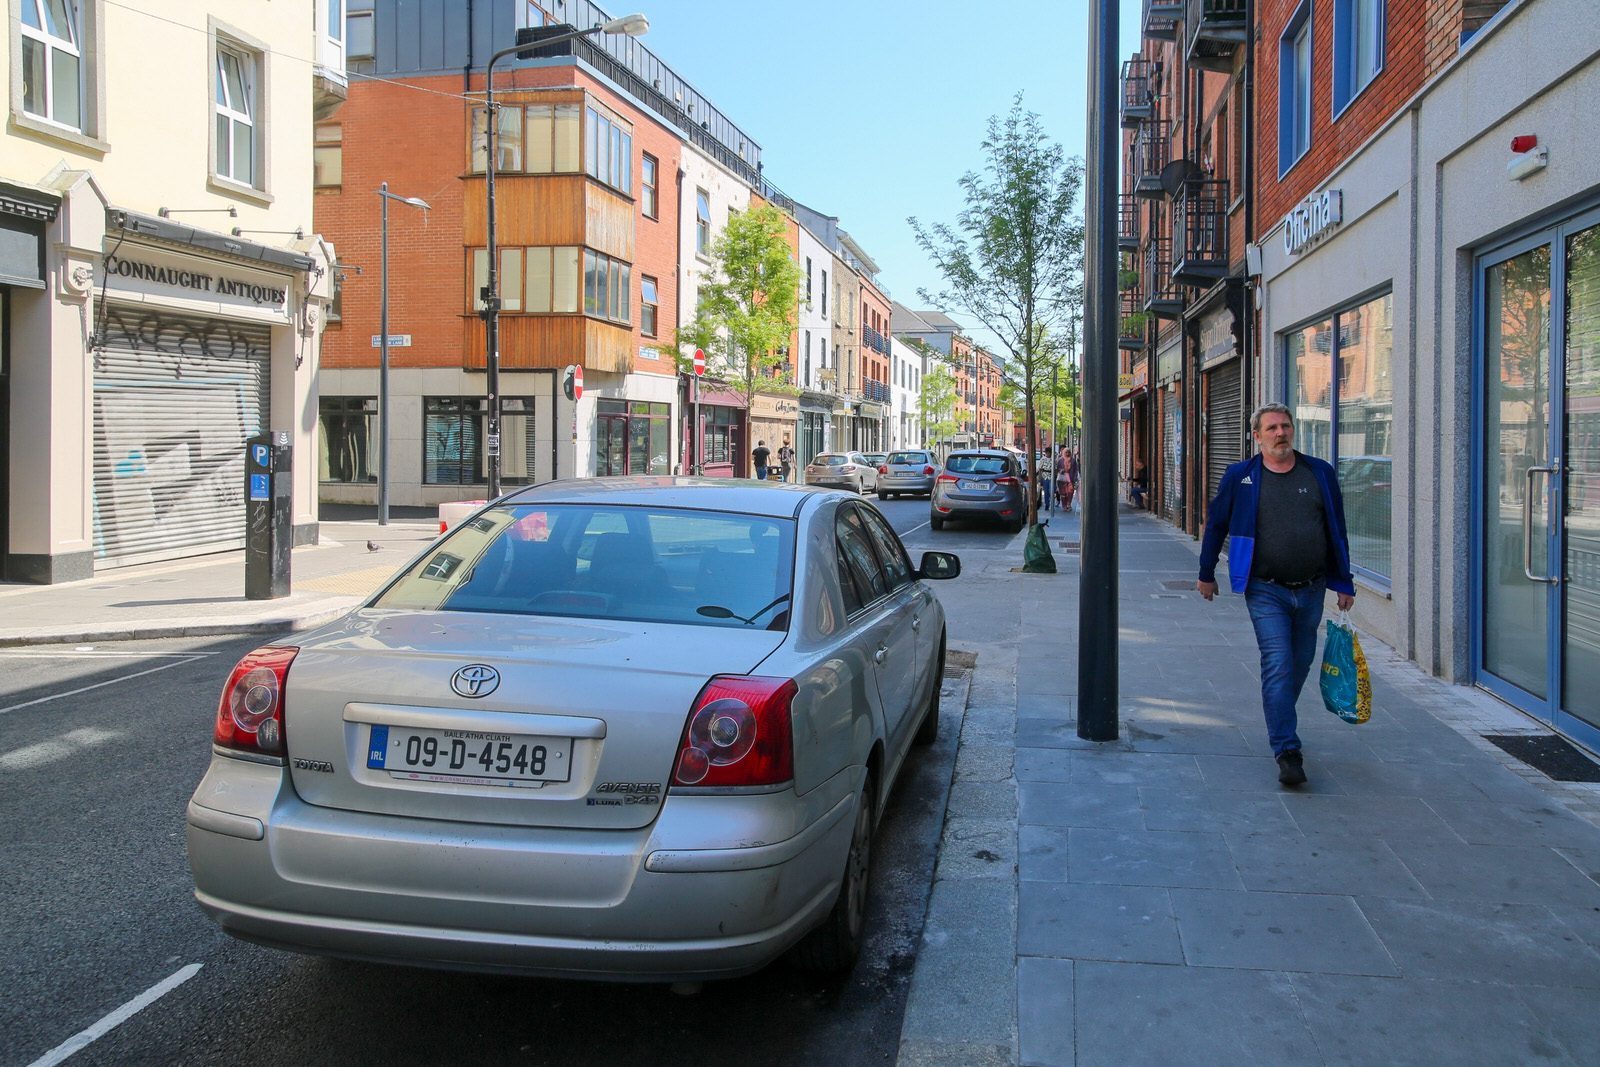 FRANCIS STREET IN DUBLIN [NO LONGER A NEVER ENDING CONSTRUCTION SITE] 012